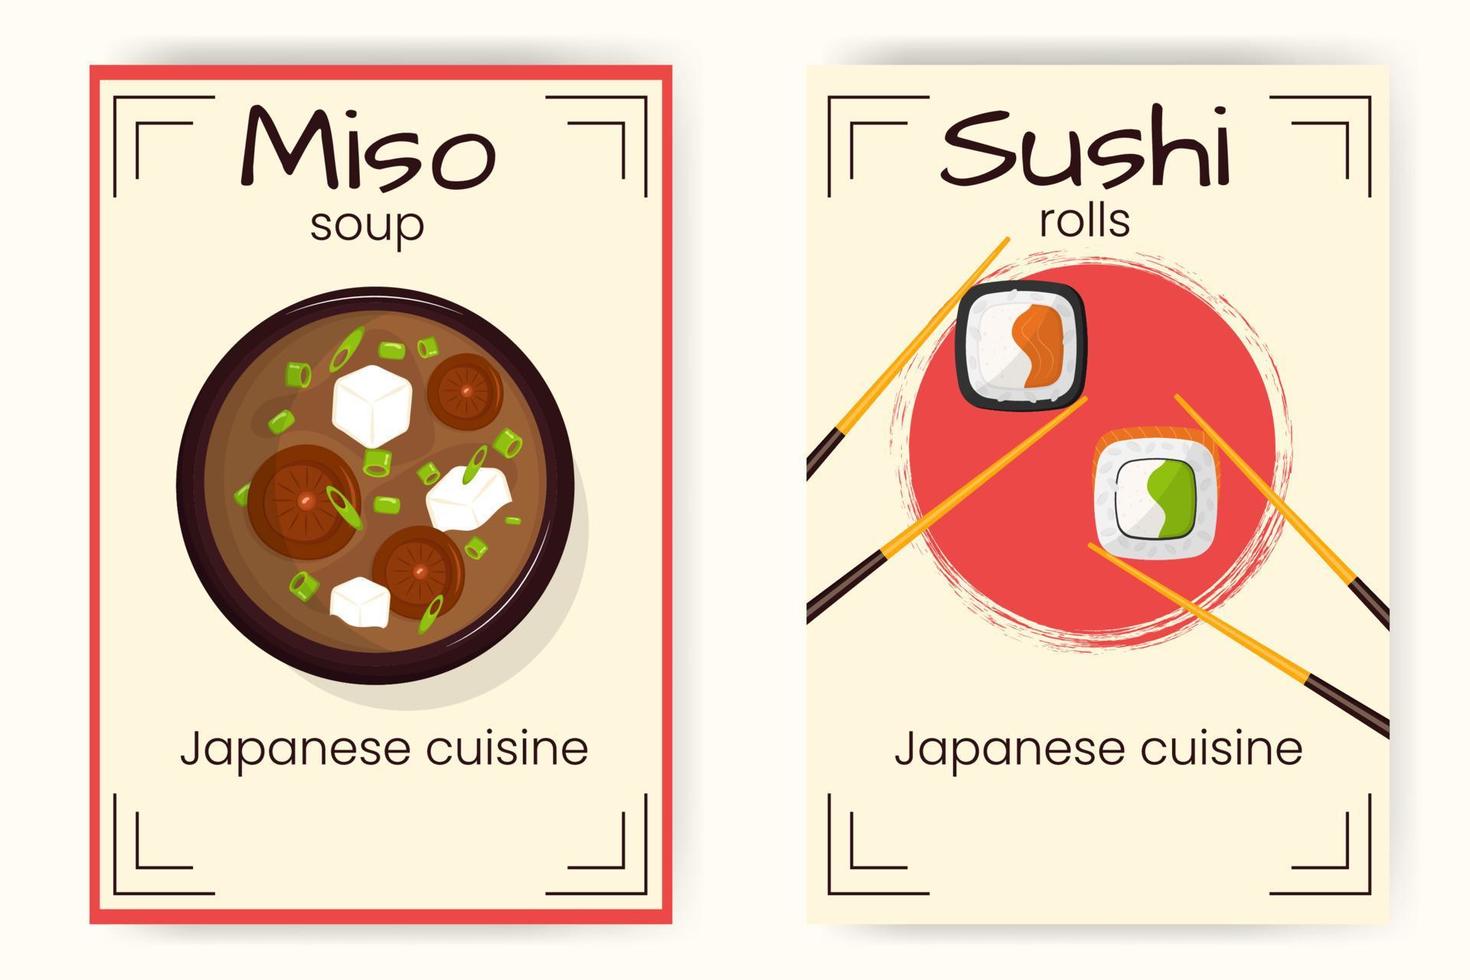 Japans restaurant posters reeks met sushi broodjes en miso soep. vector illustratie.